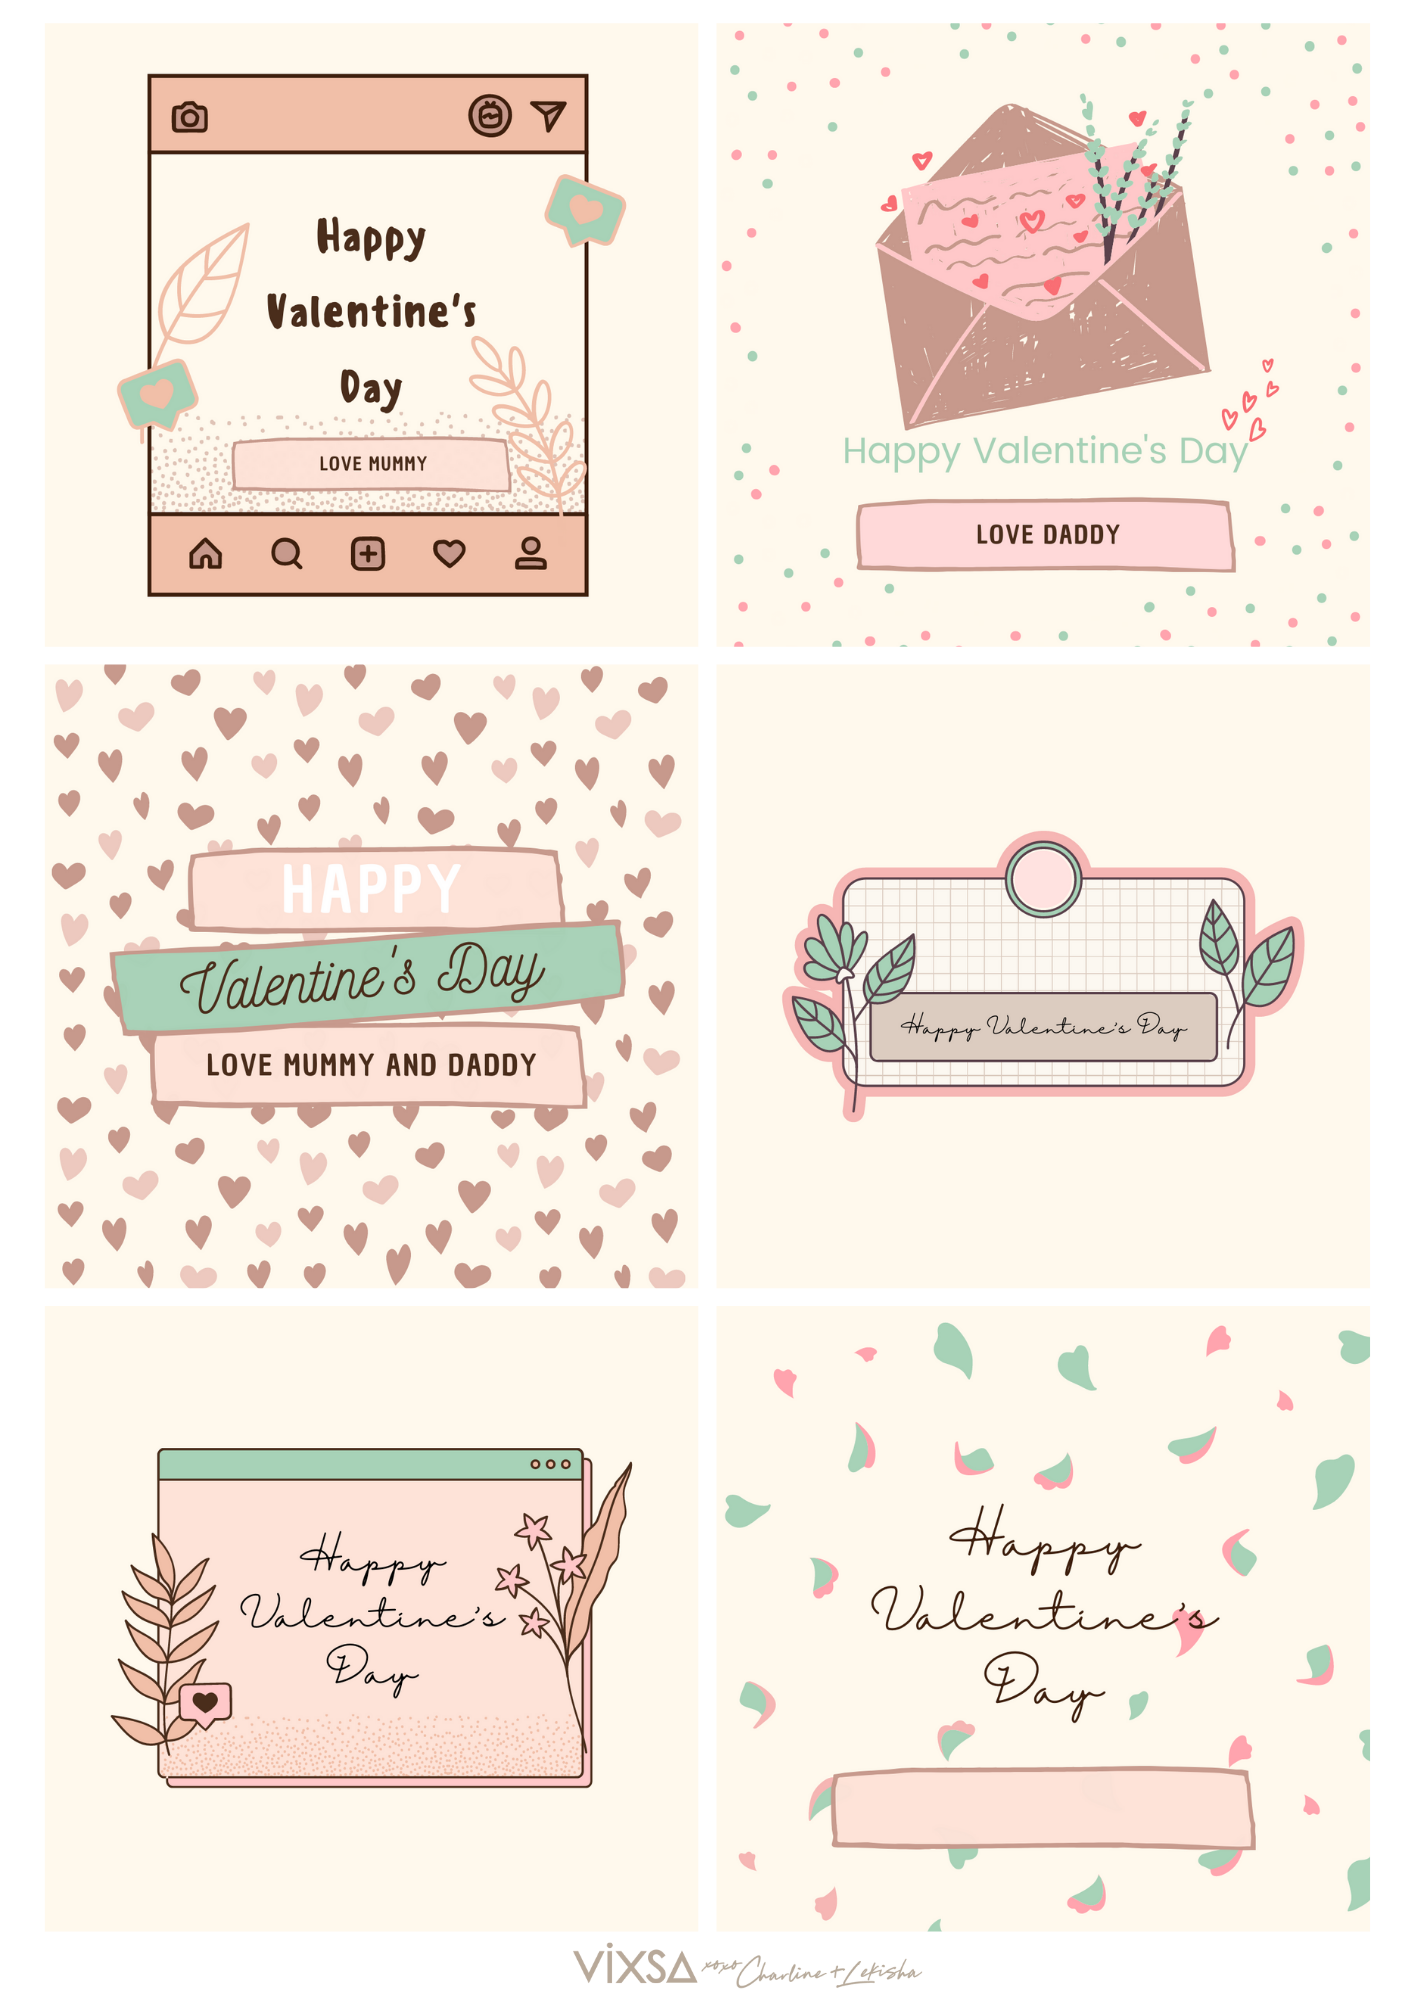 FREE Valentine's Day Love Notes - VIXSA